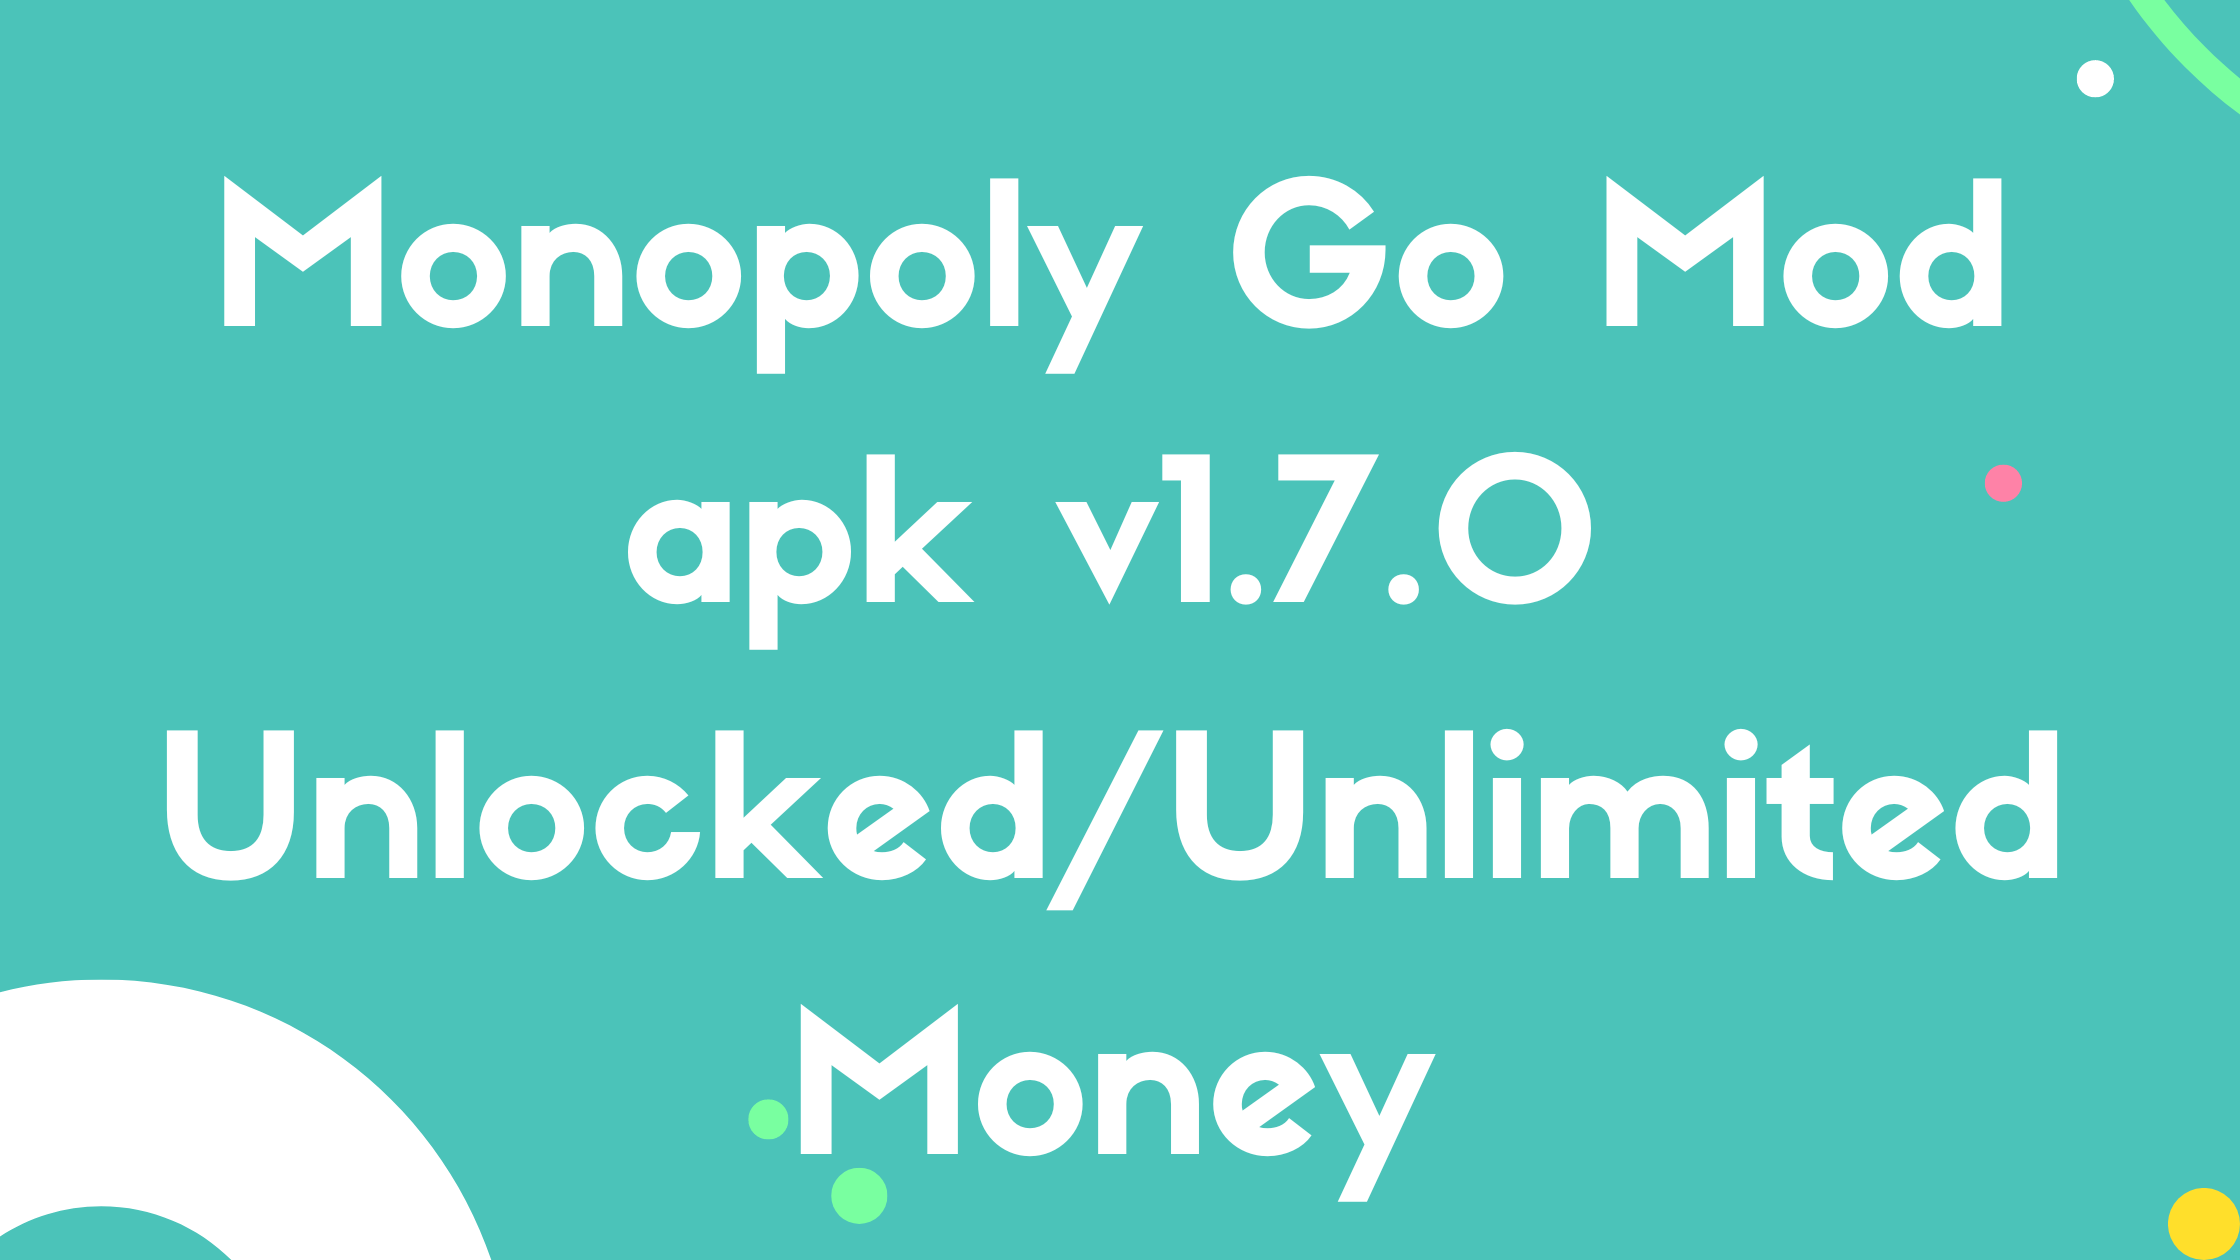 Monopoly Go Mod apk v1.7.0 Unlocked/Unlimited Money